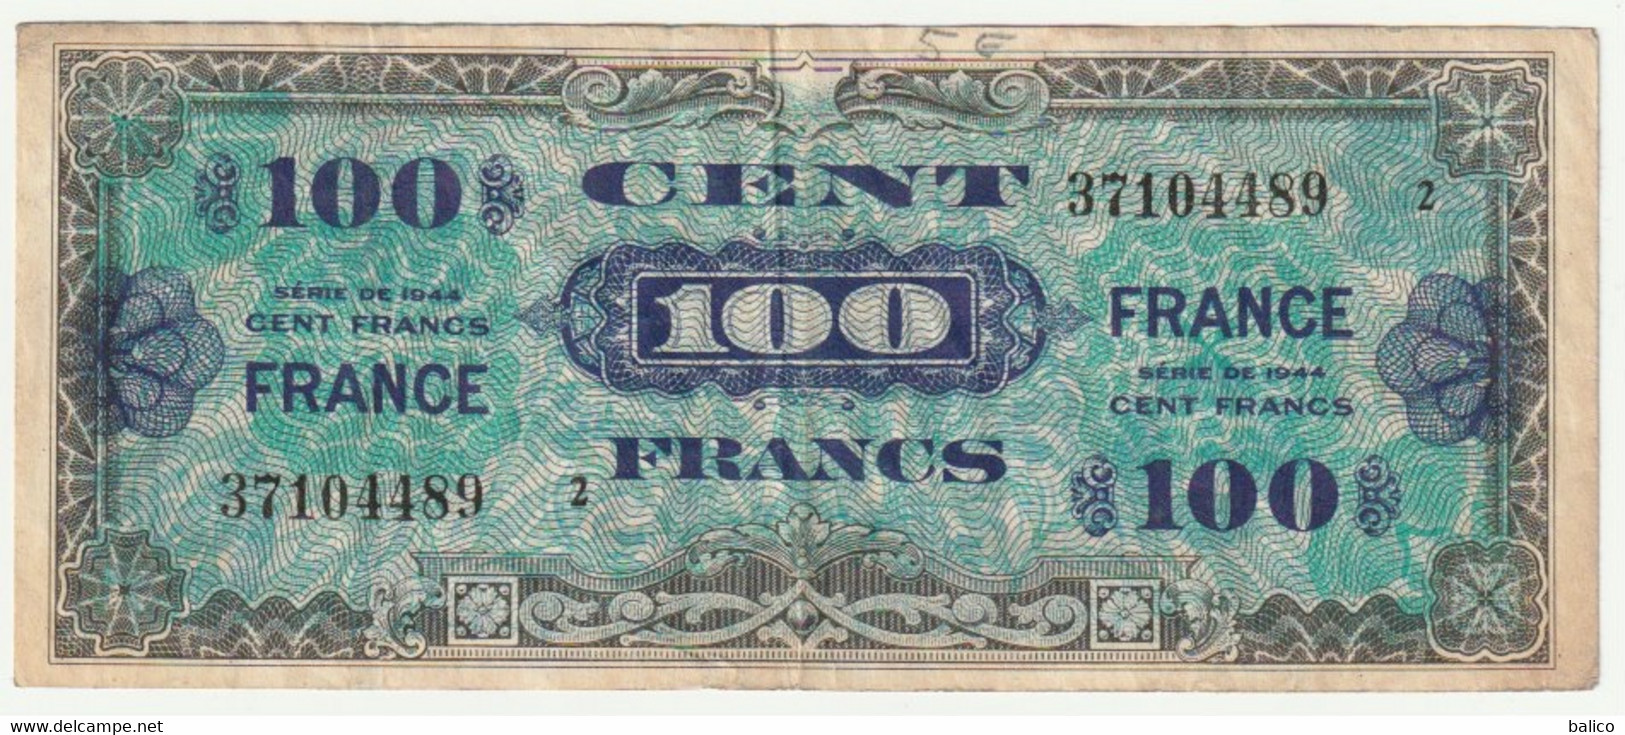 France, 100 Francs   1944   N° 37104489 - 1944 Drapeau/Francia